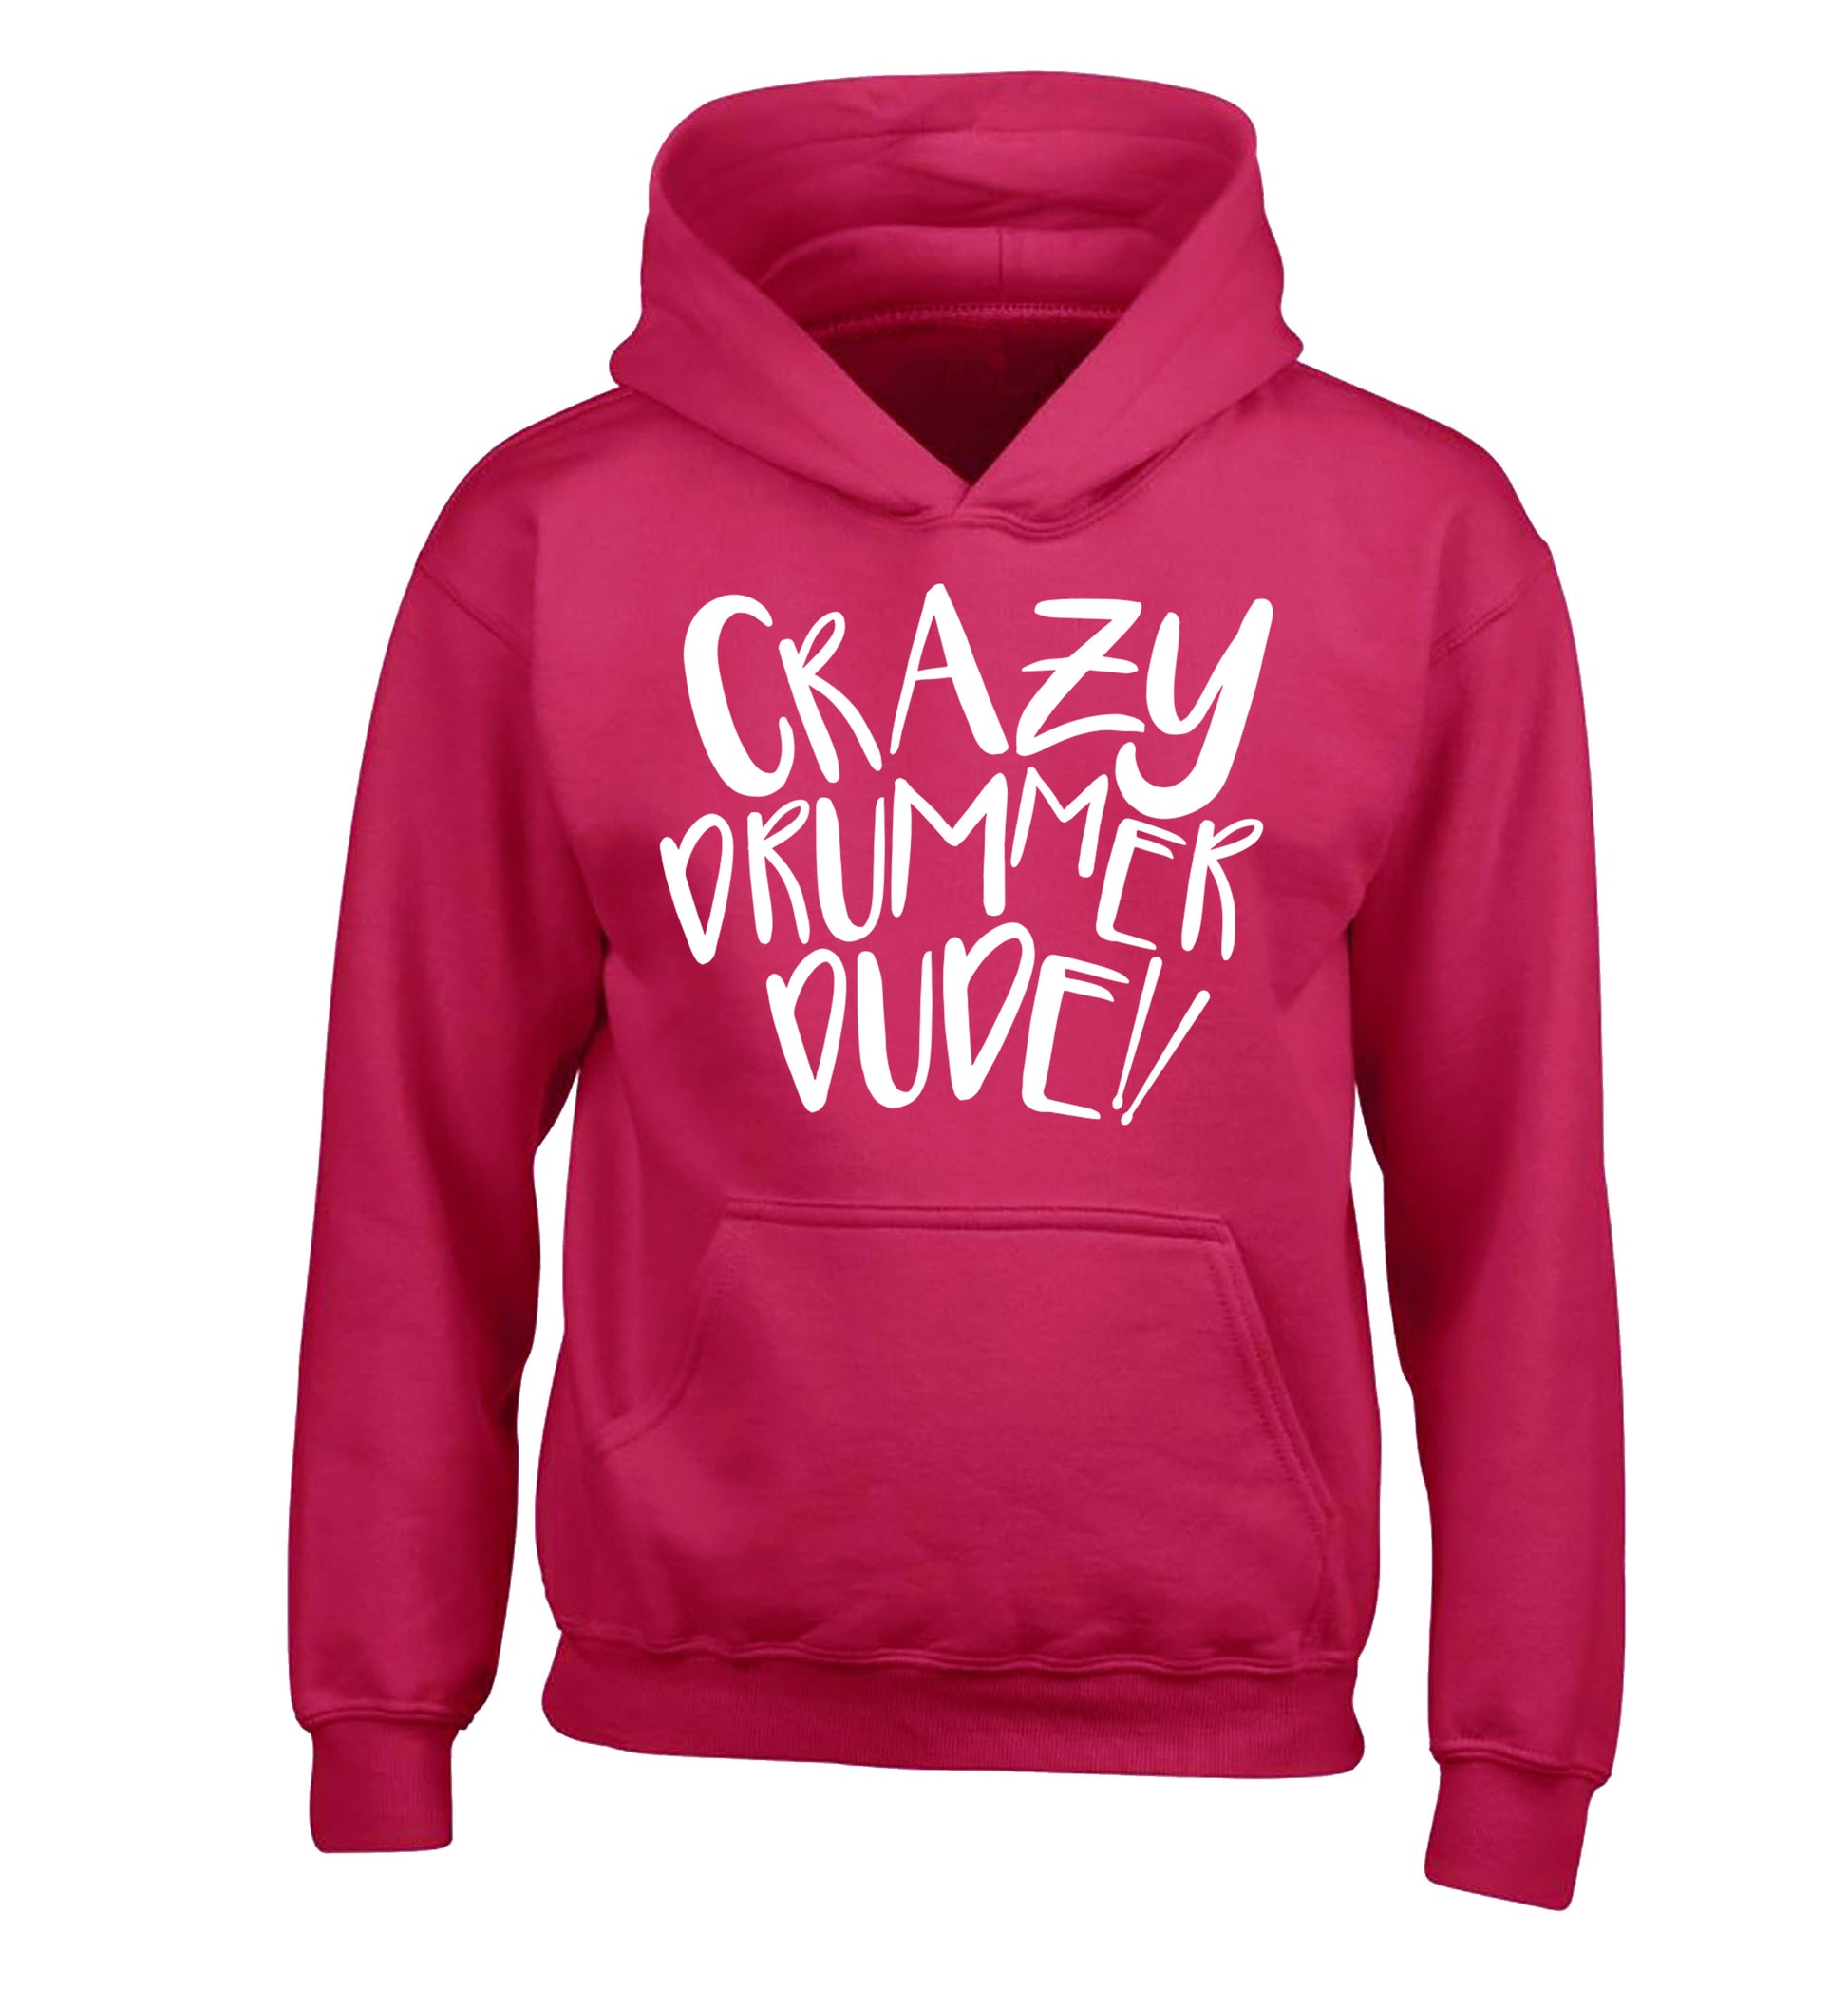 Crazy drummer dude children's pink hoodie 12-14 Years